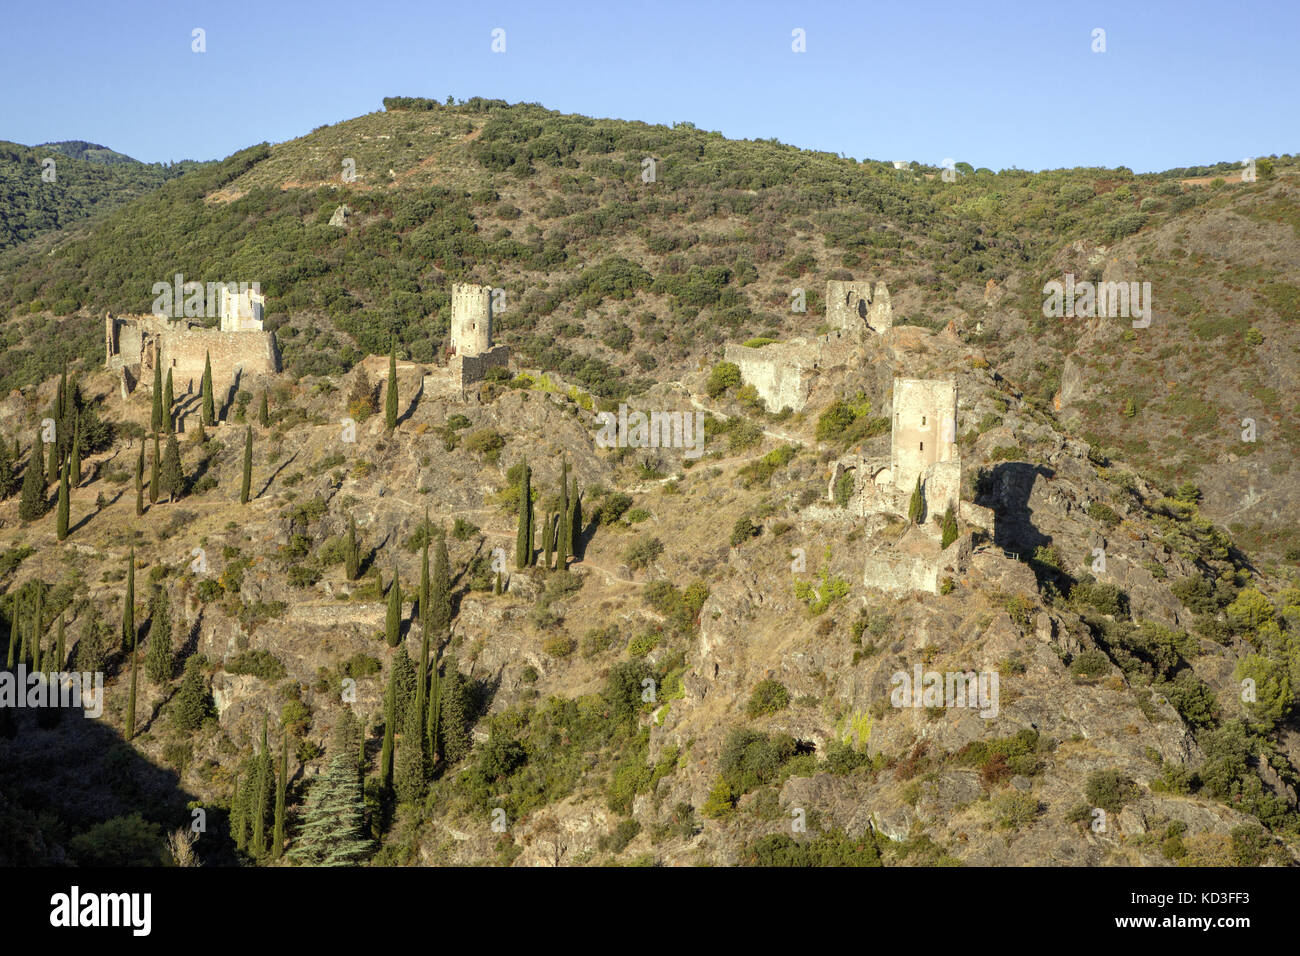 The four castles forming the Châteaux de Lastours, perched on a rocky spur above the village of Lastours Stock Photo